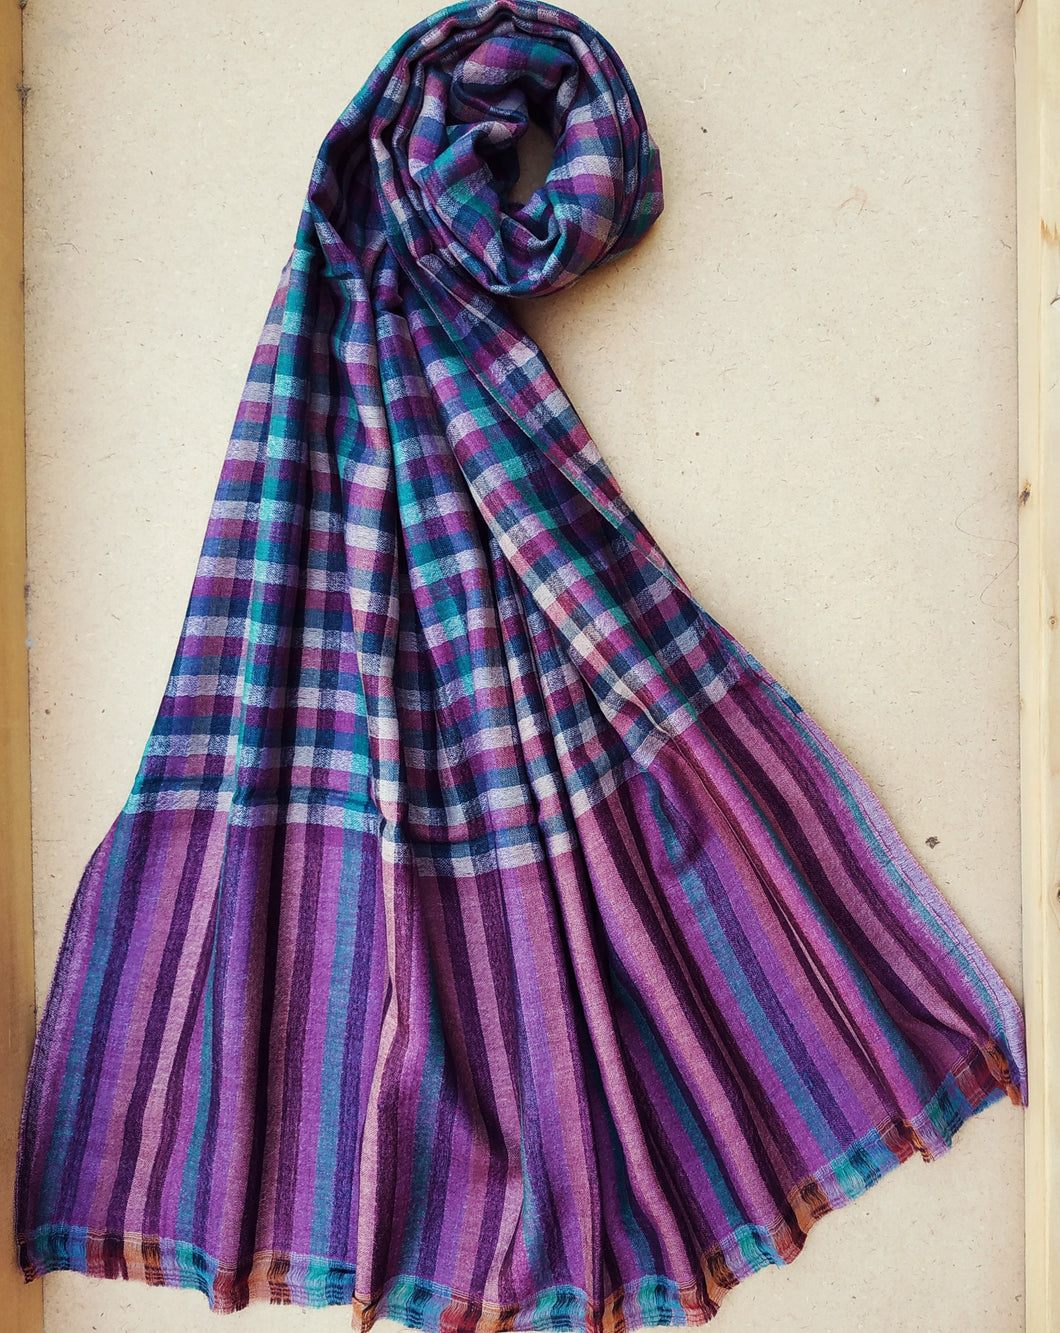 Cashmere Wrap- 100% Cashmere- Cashmere Shawl-  Pashmina scarf- Cashmere Scarf- Winter Accessories- Winter Pashmina Shawl- Cashmere shawls